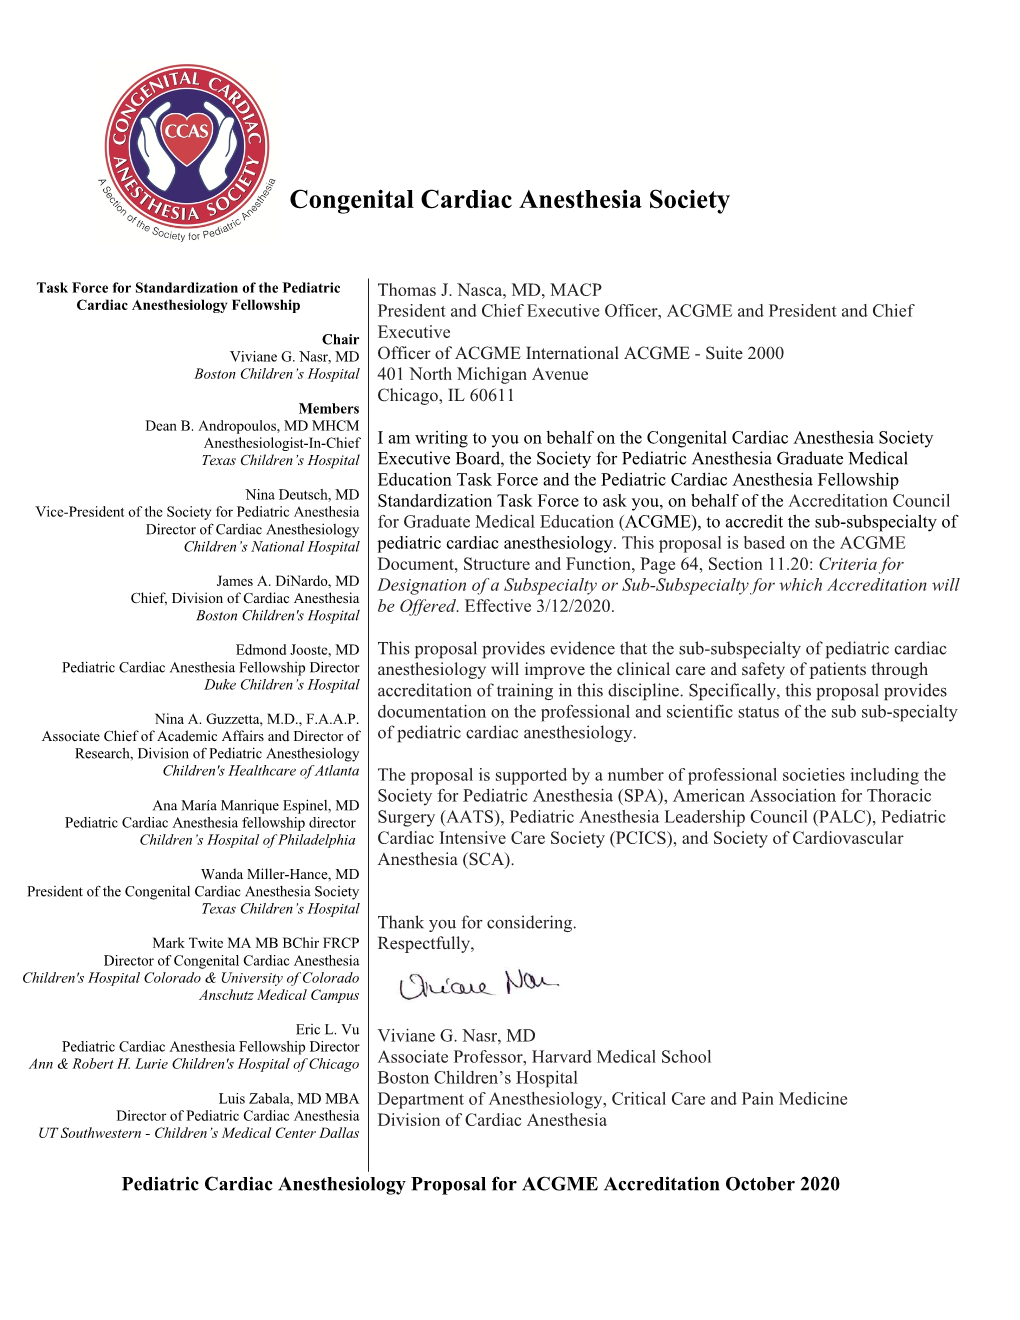 Pediatric Cardiac Anesthesiology Proposal for ACGME Accreditation October 2020 Pediatric Cardiac Anesthesiology Proposal October 2020 Introduction